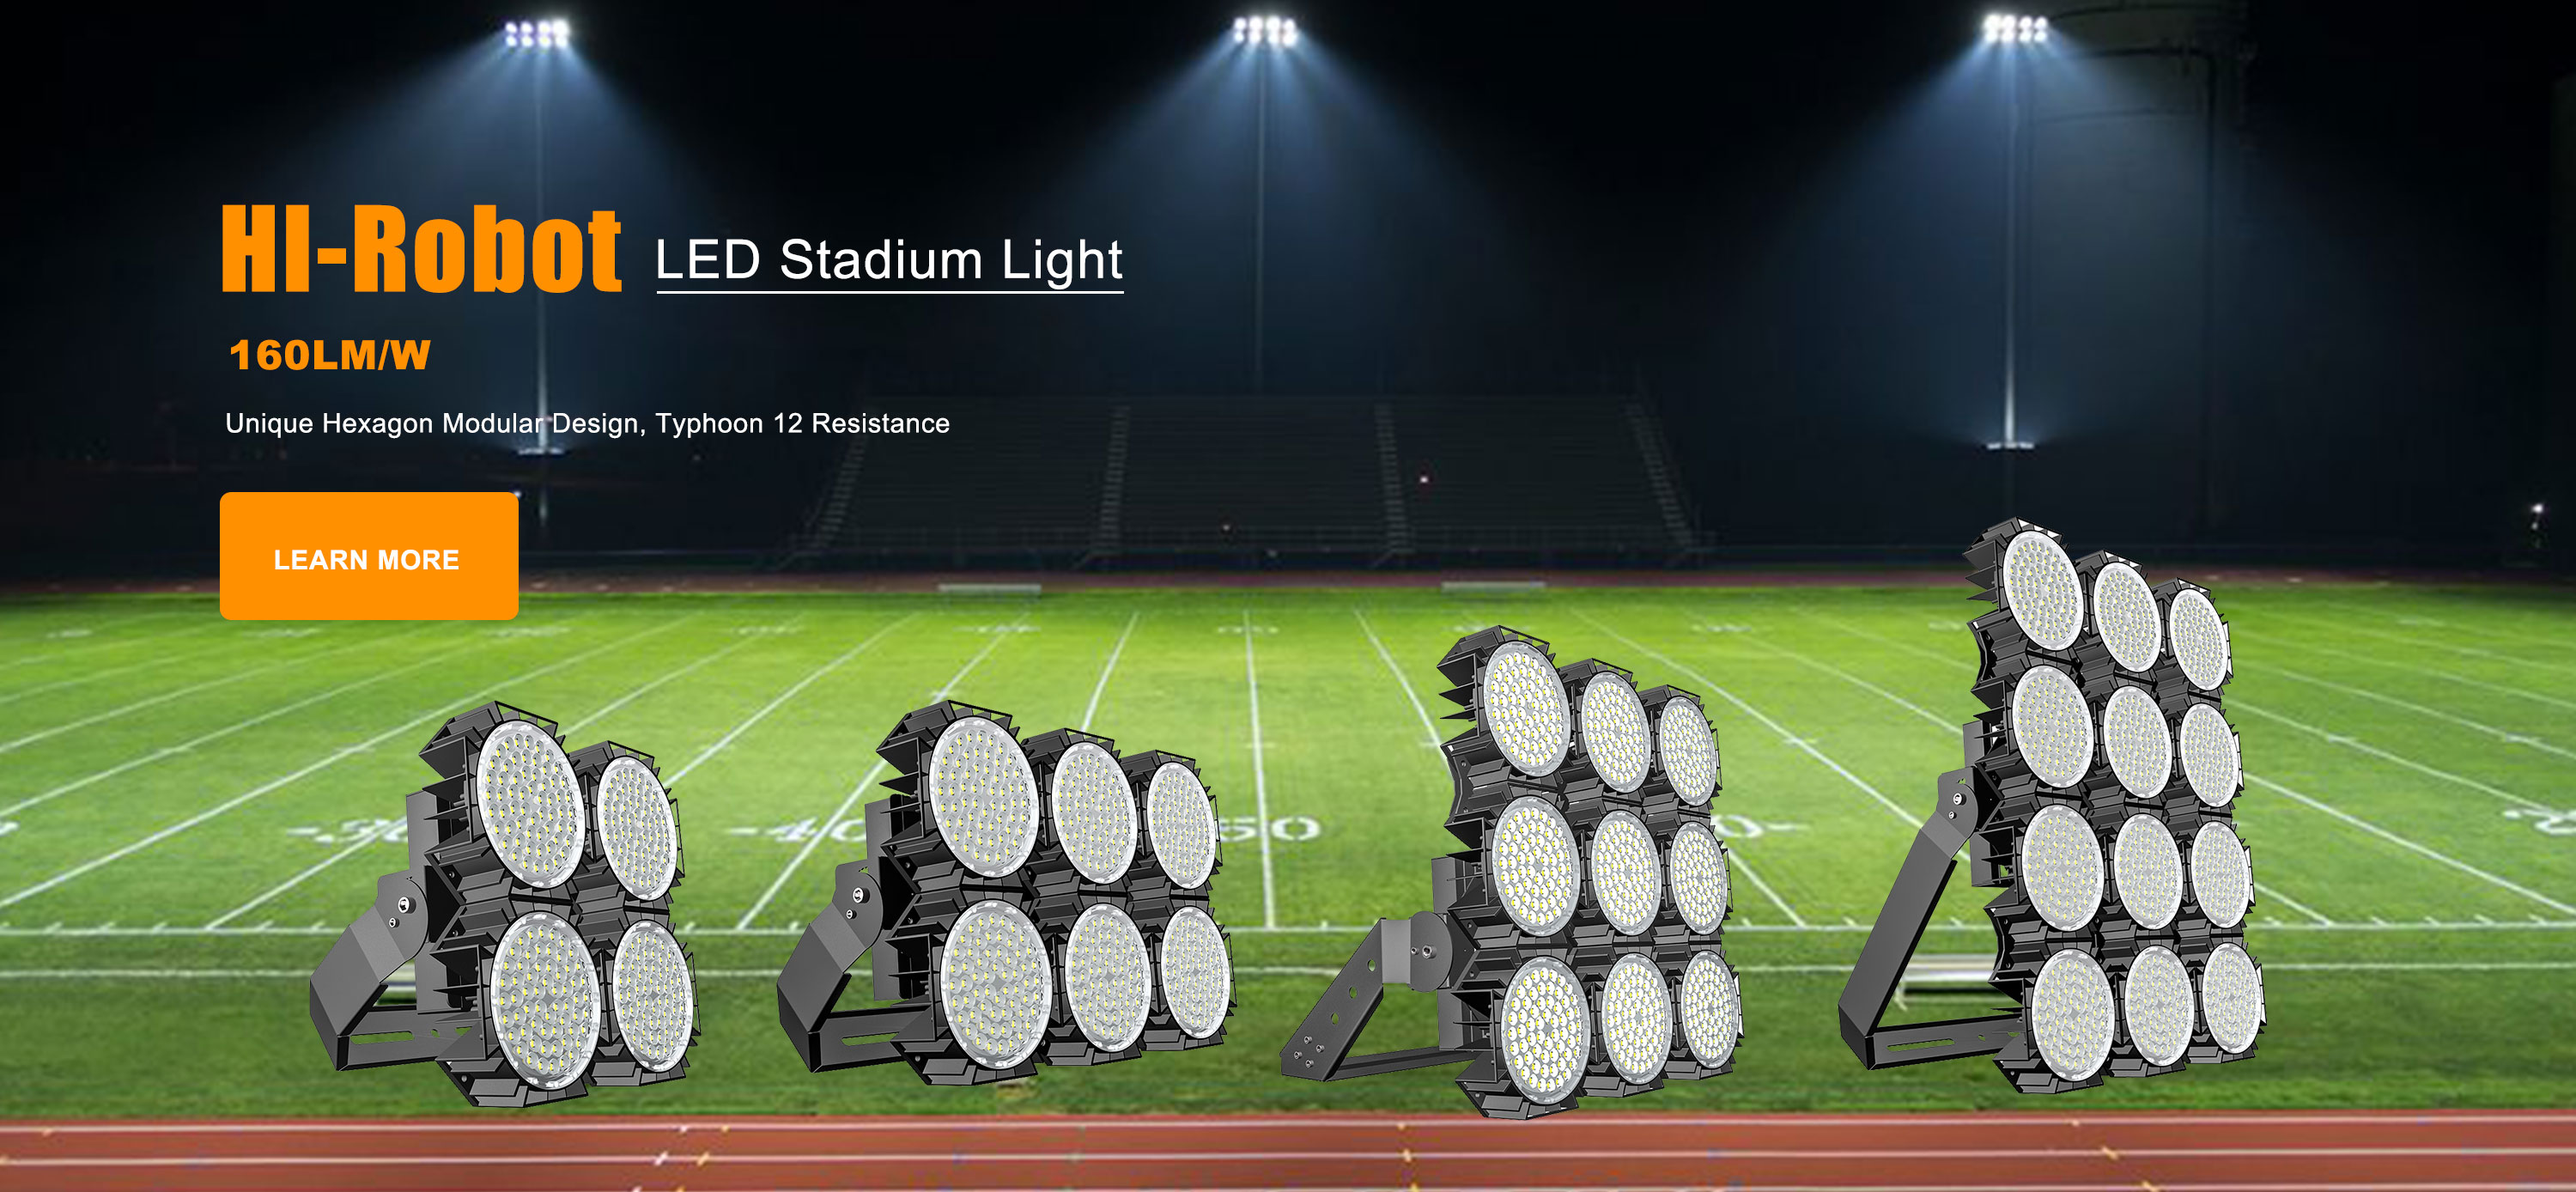 Hi-Robot stadium light series